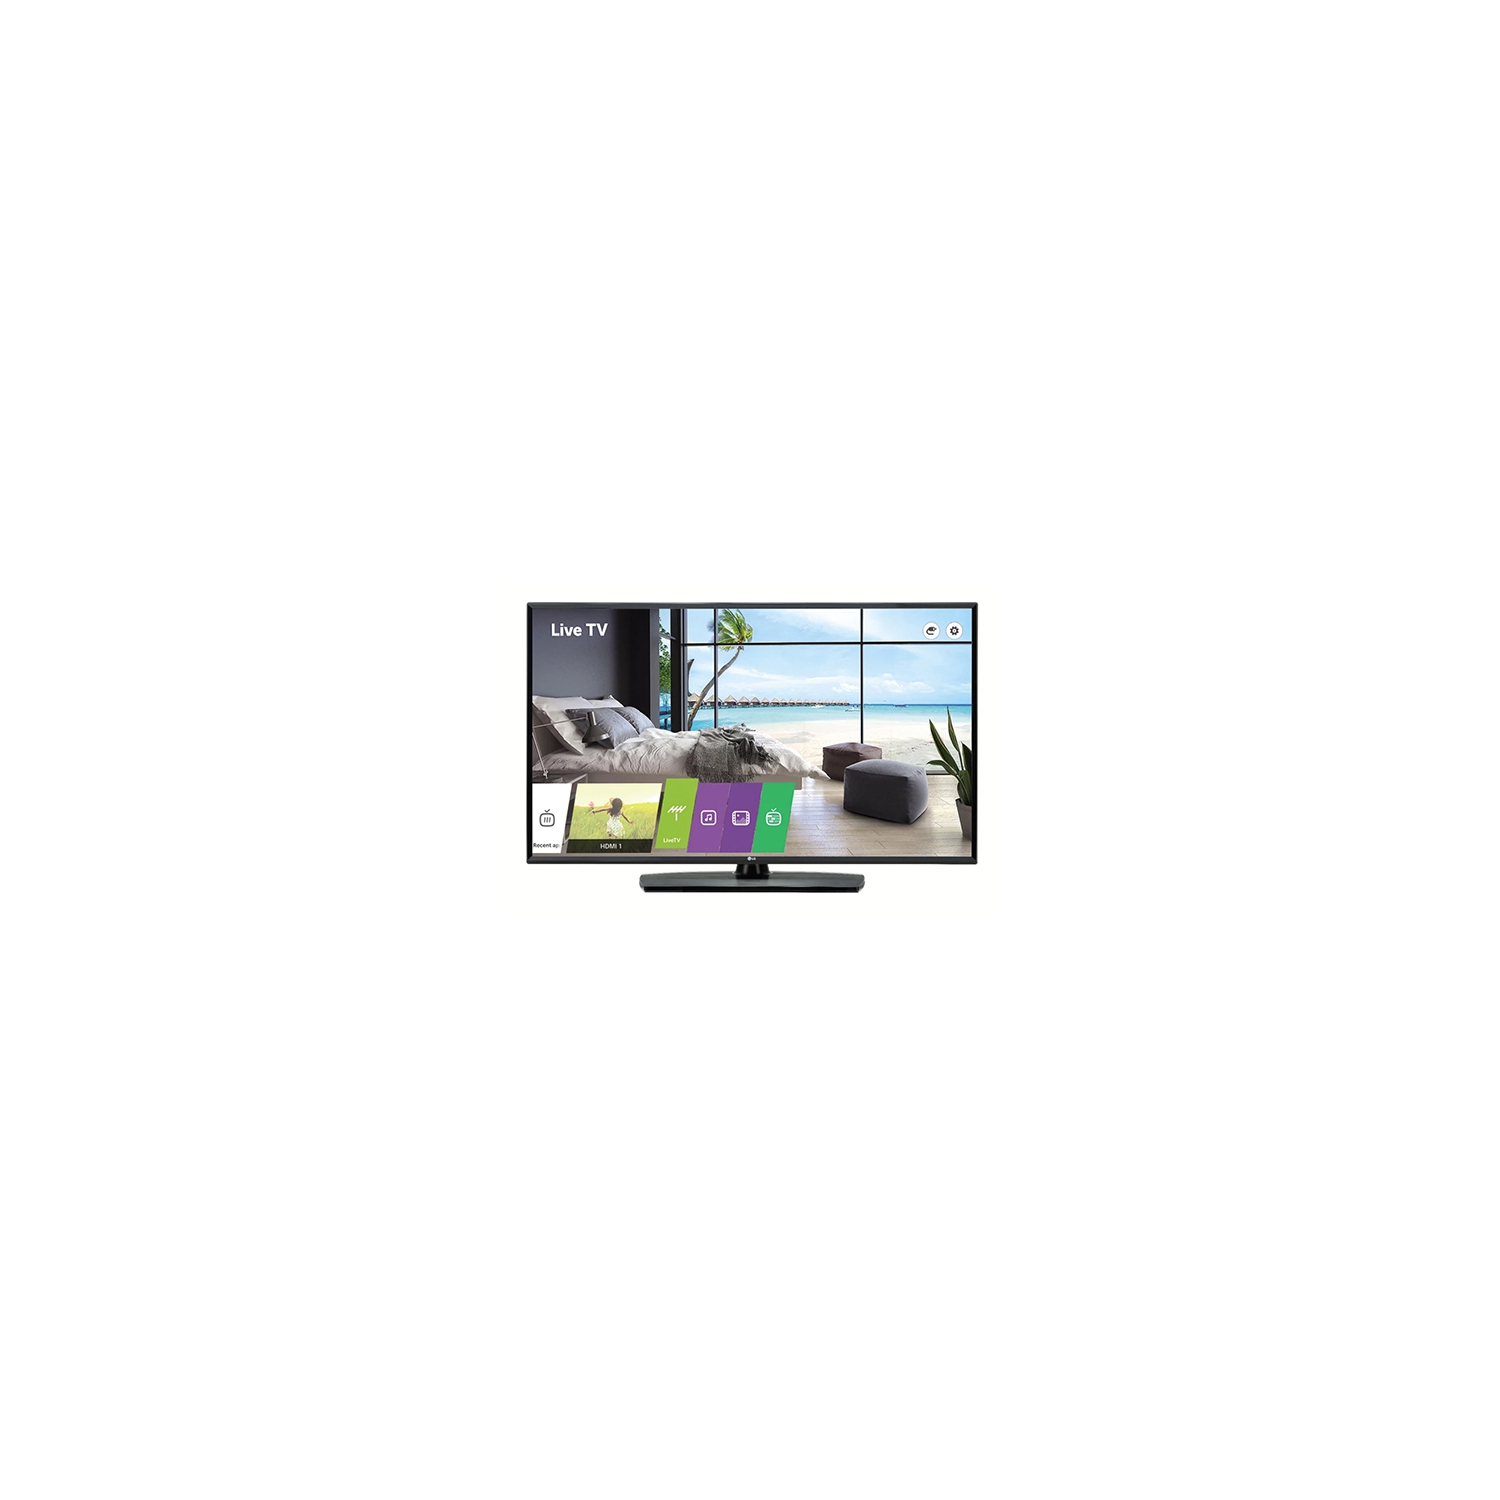 Refurbished (Excellent) - LG UT570H Series 49" 4K UHD Commercial Displays (49UT570H0UA) - Titan Black